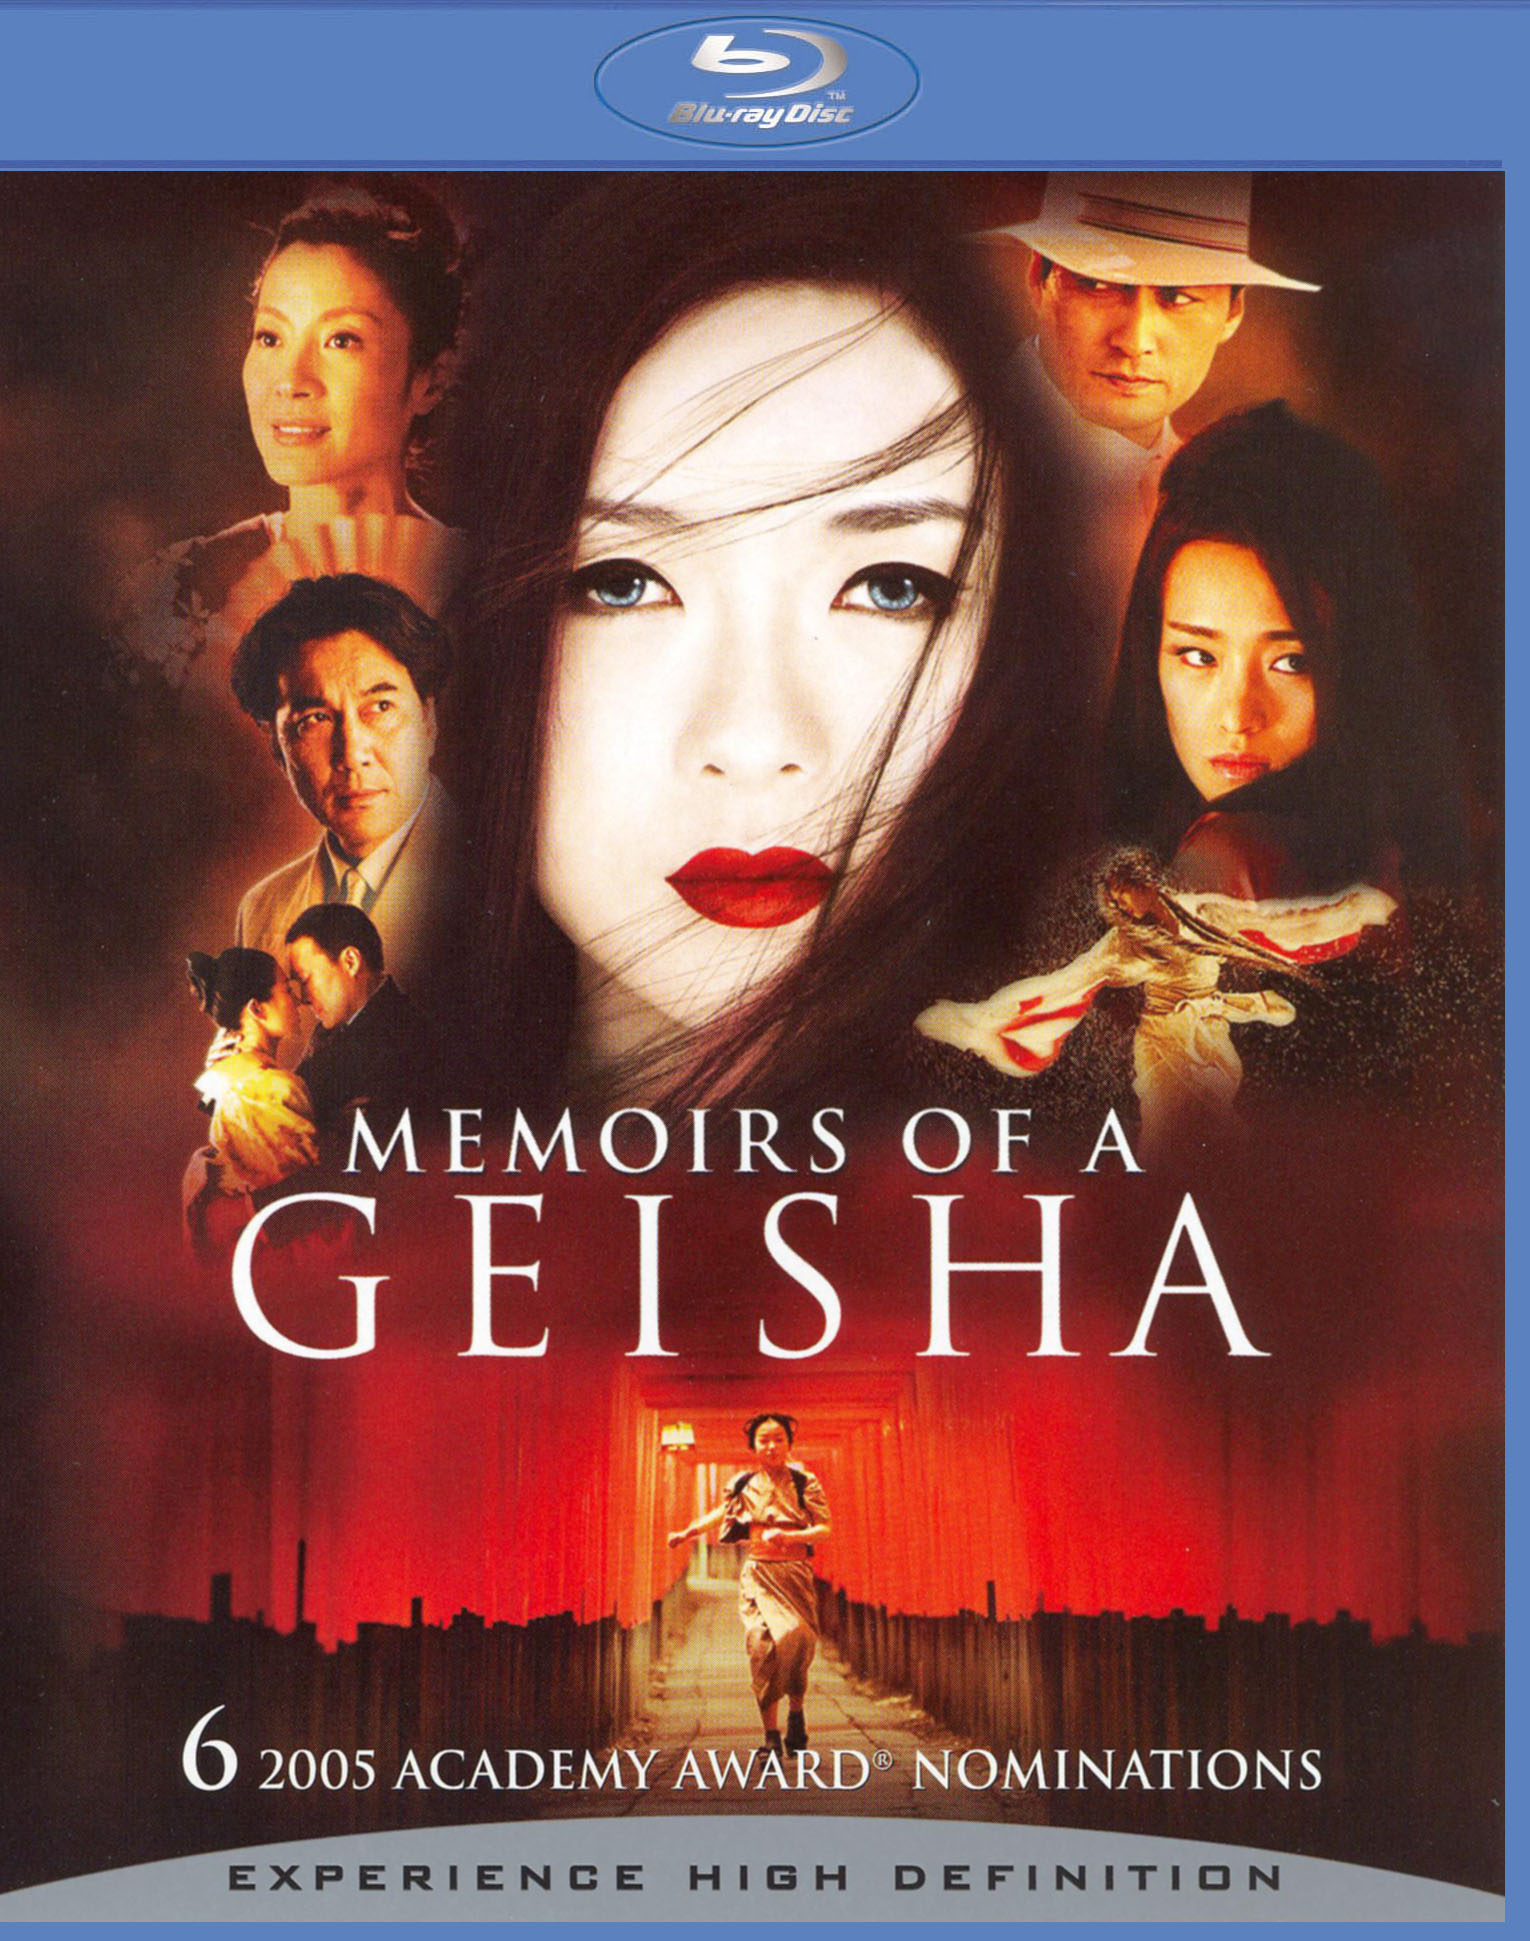 Memoirs of a geisha subtitles english